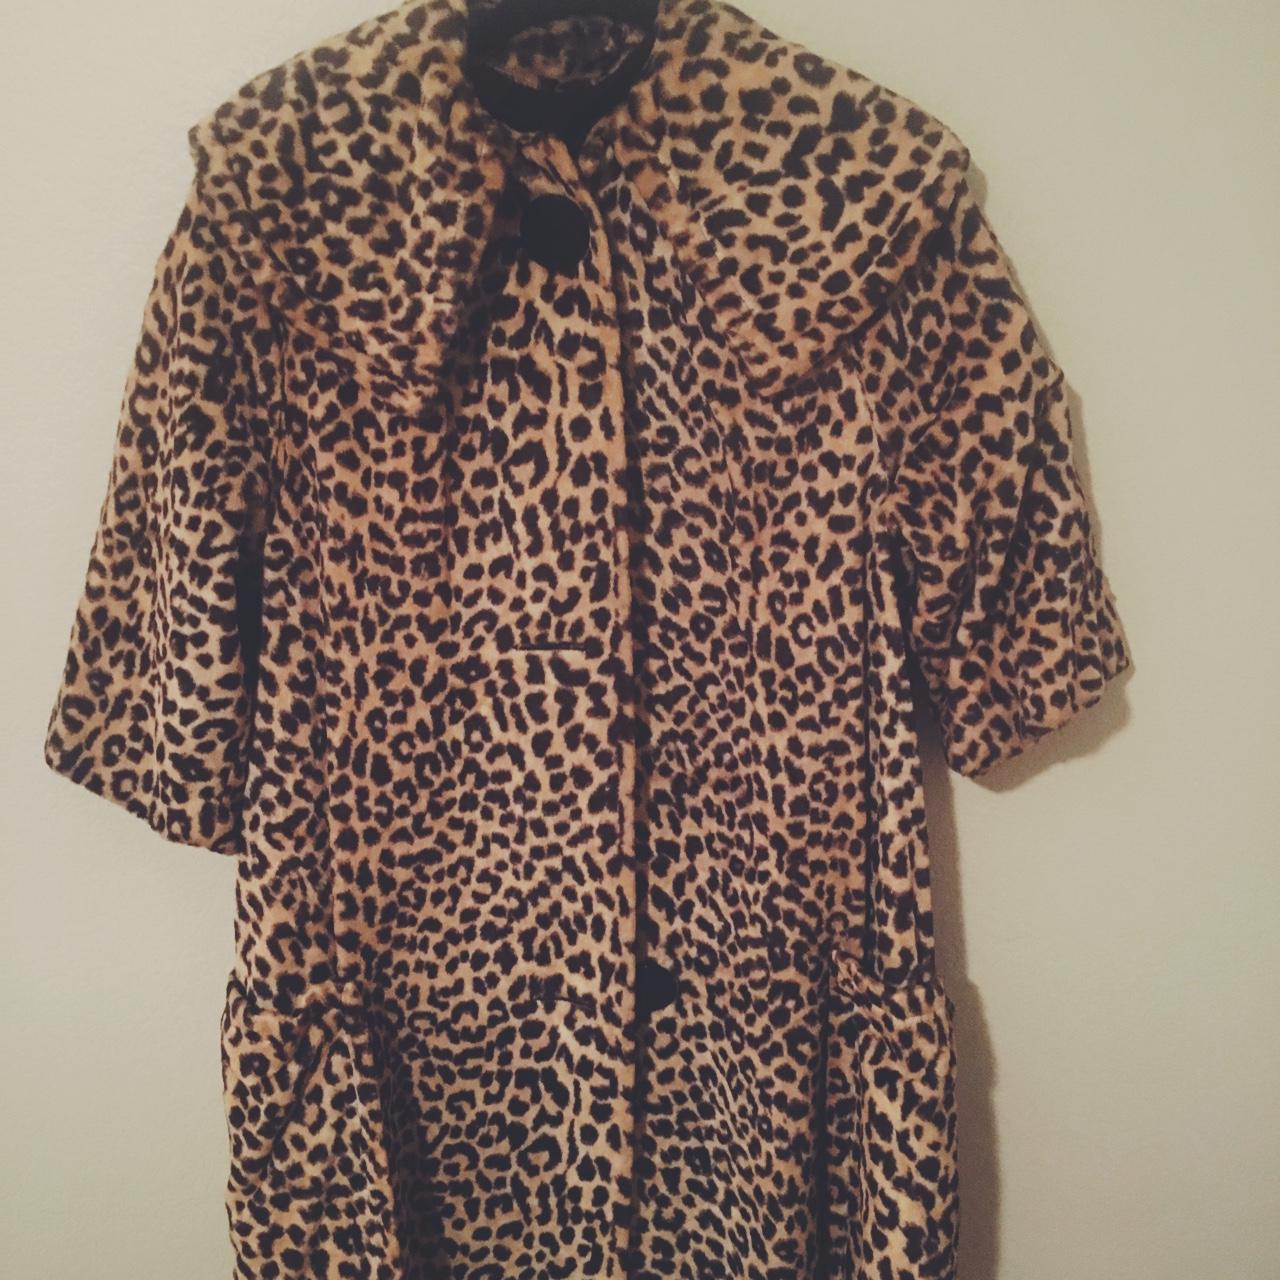 Sassy 1960's vintage leopard coat. Adorned with fun... - Depop